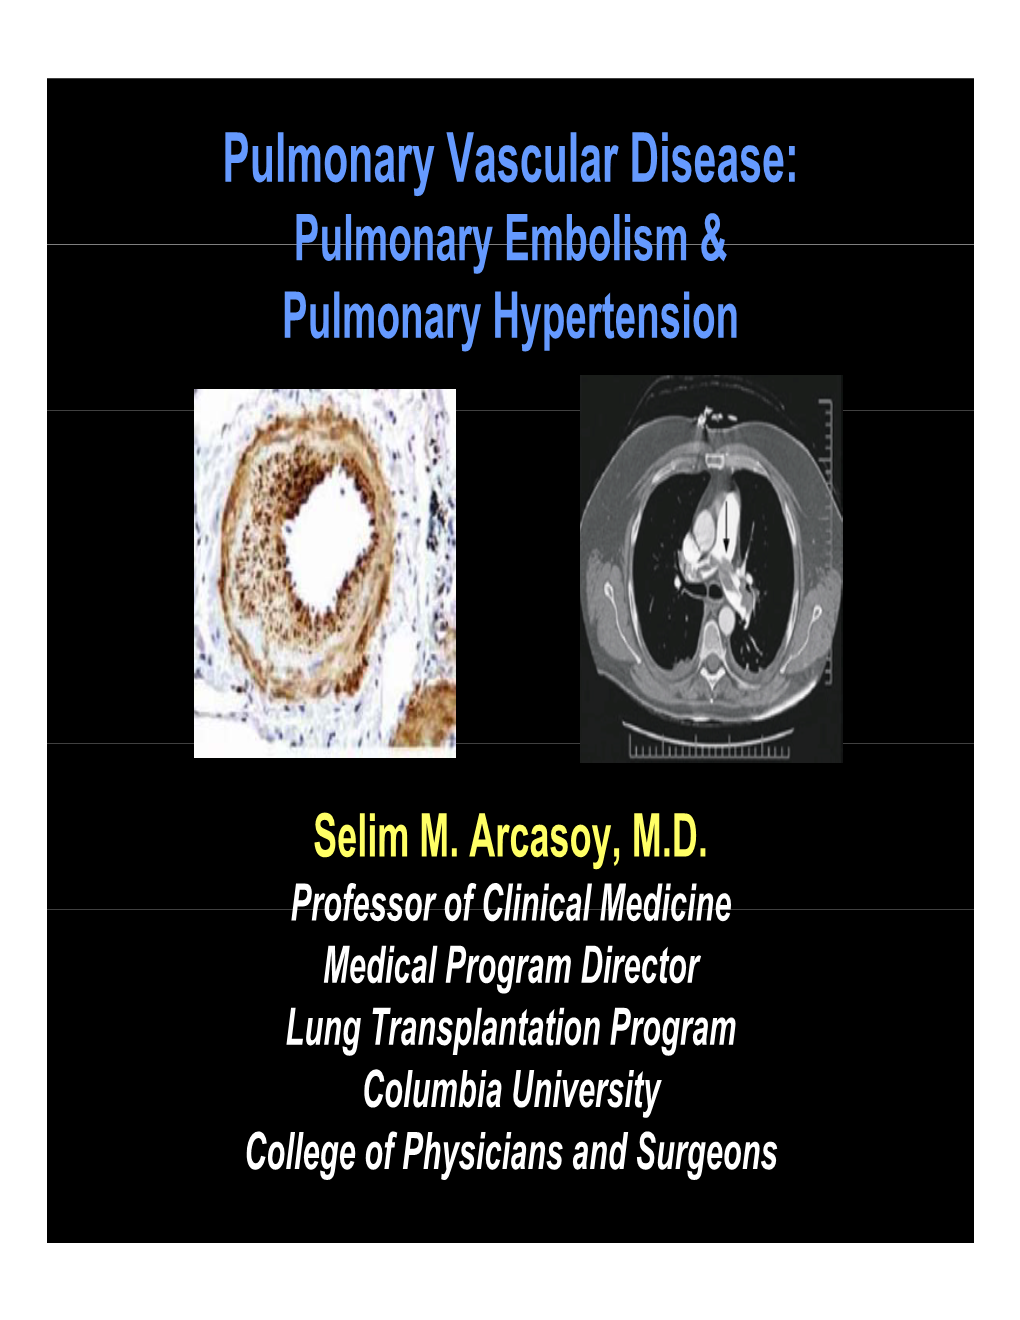 Pulmonary Vascular Disease: Pulmonary Embolism & Pulmonary Hypertension